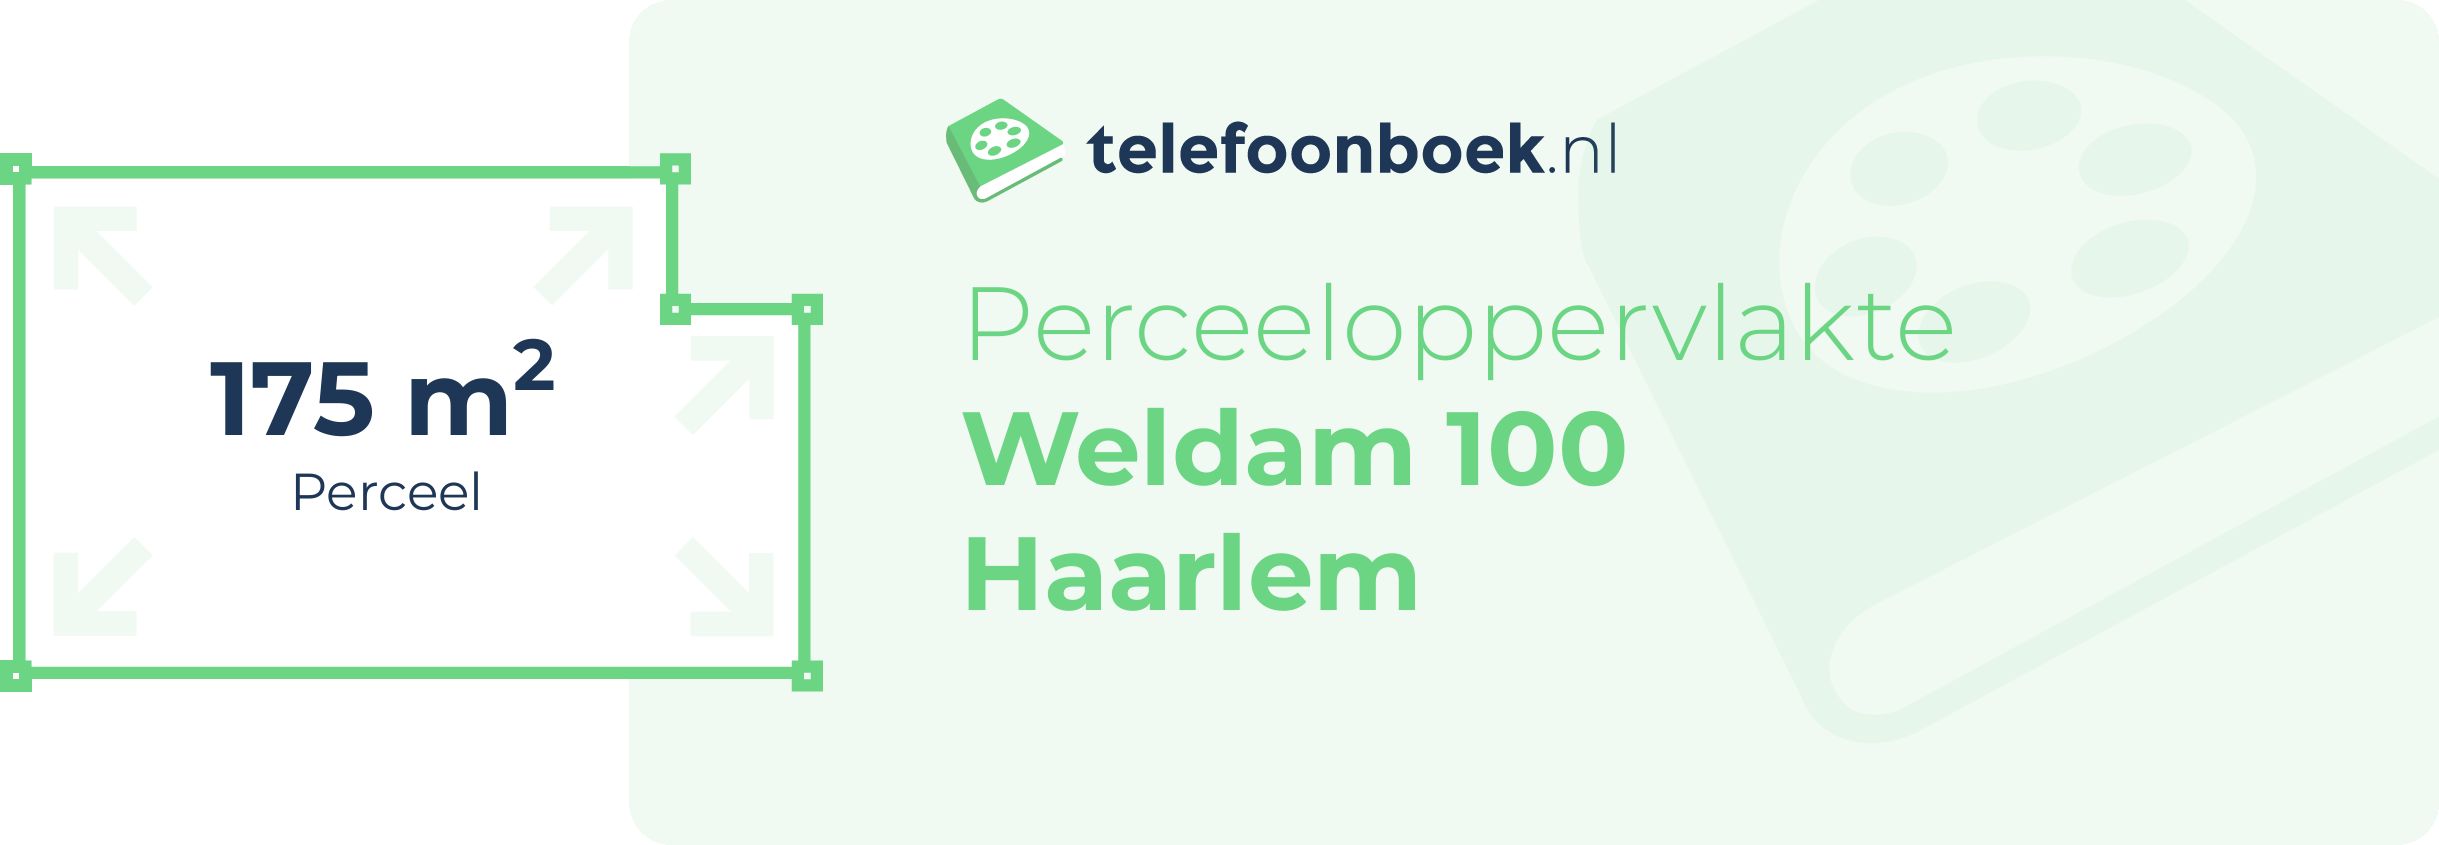 Perceeloppervlakte Weldam 100 Haarlem